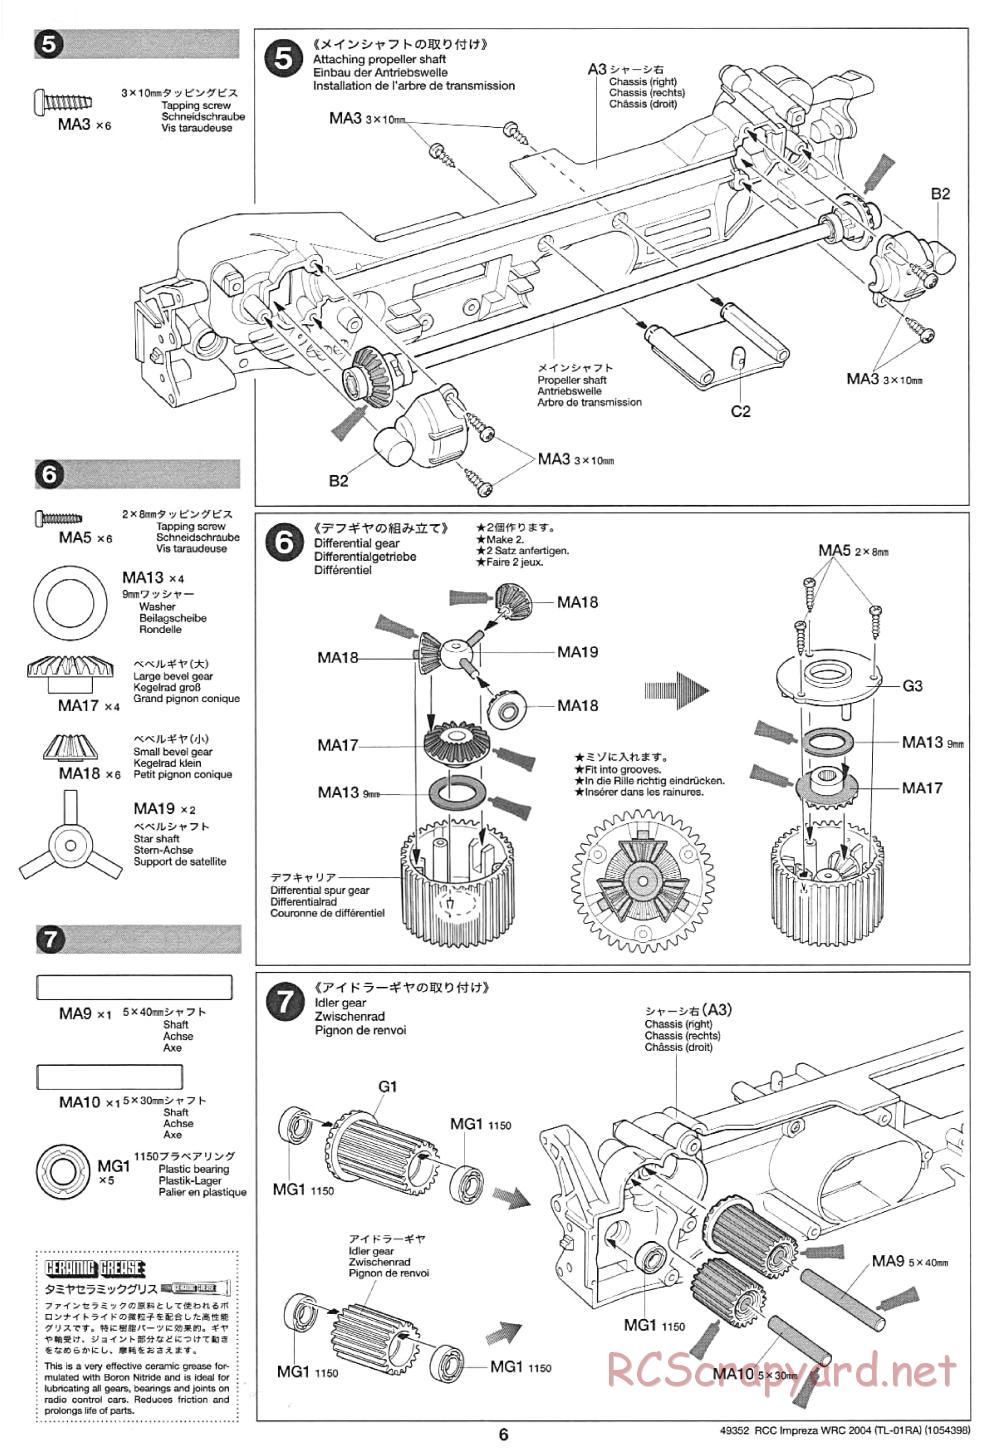 Tamiya - Subaru Impreza WRC 2004 Chassis - Manual - Page 6